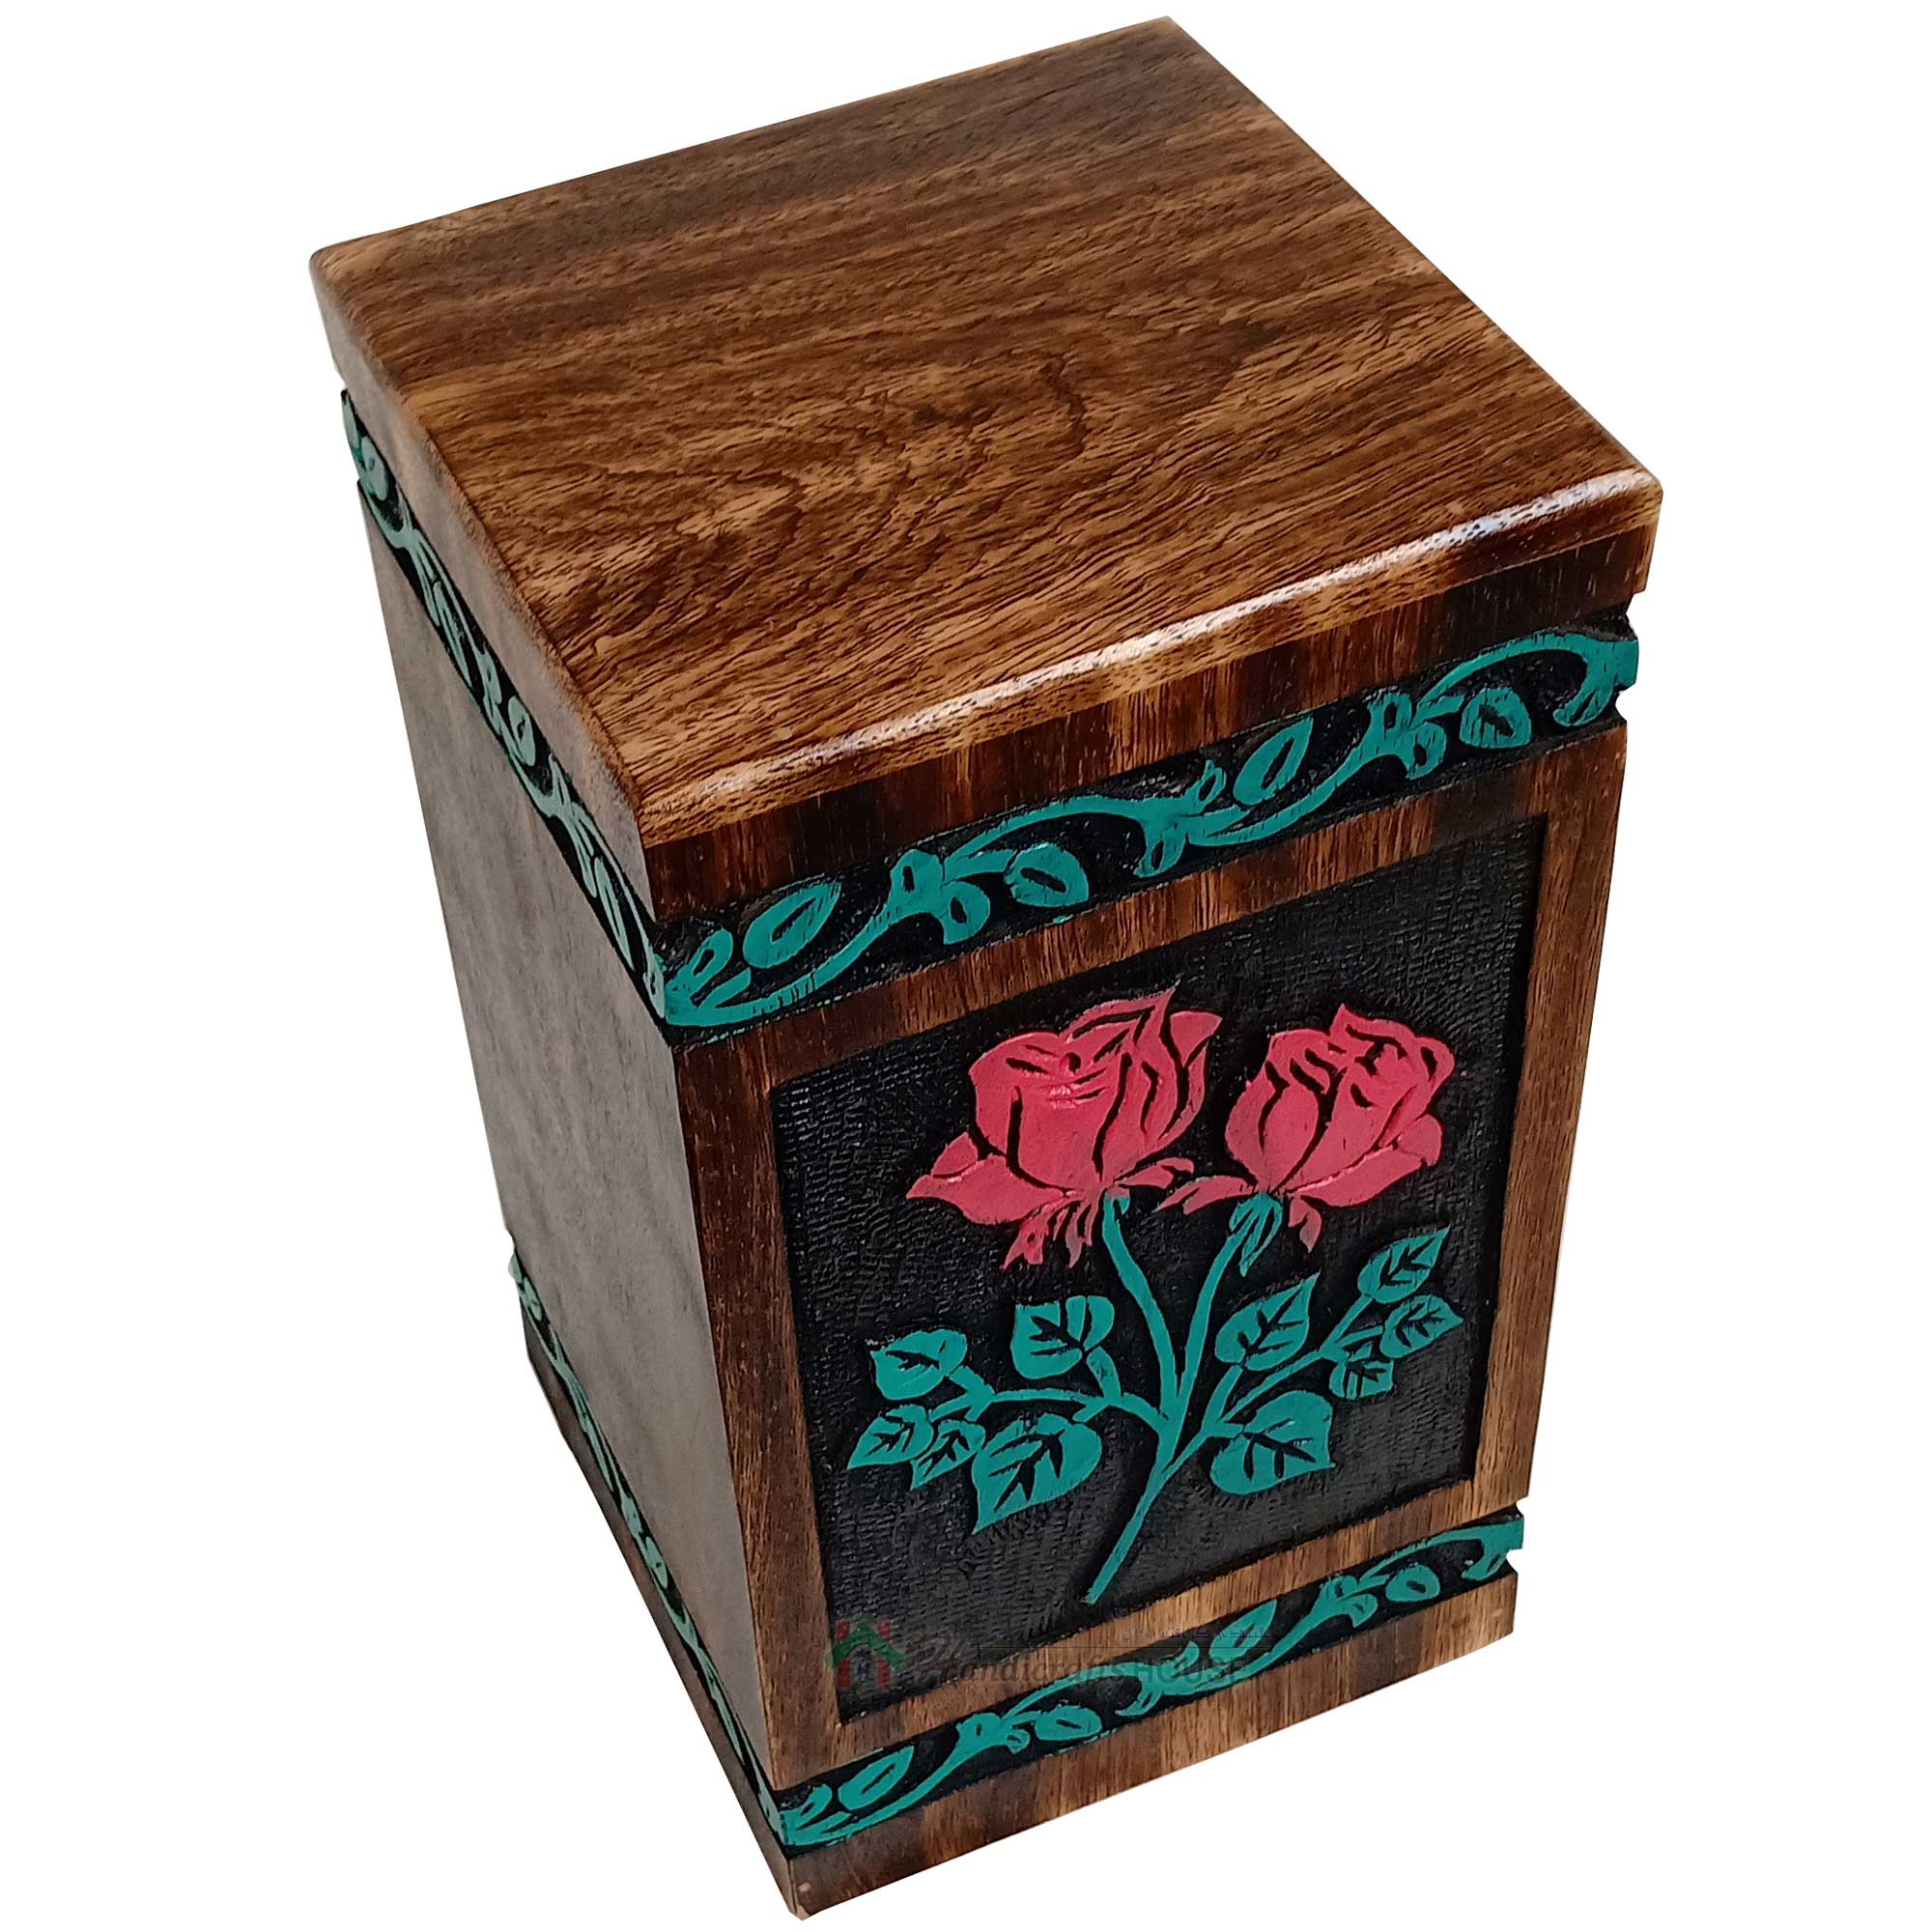 Hands Engraving Rose Flower Wooden Cremation Urns, Wood Funeral Urn for Human or Pet Ashes Adult - Hardwood Memorial Large Box